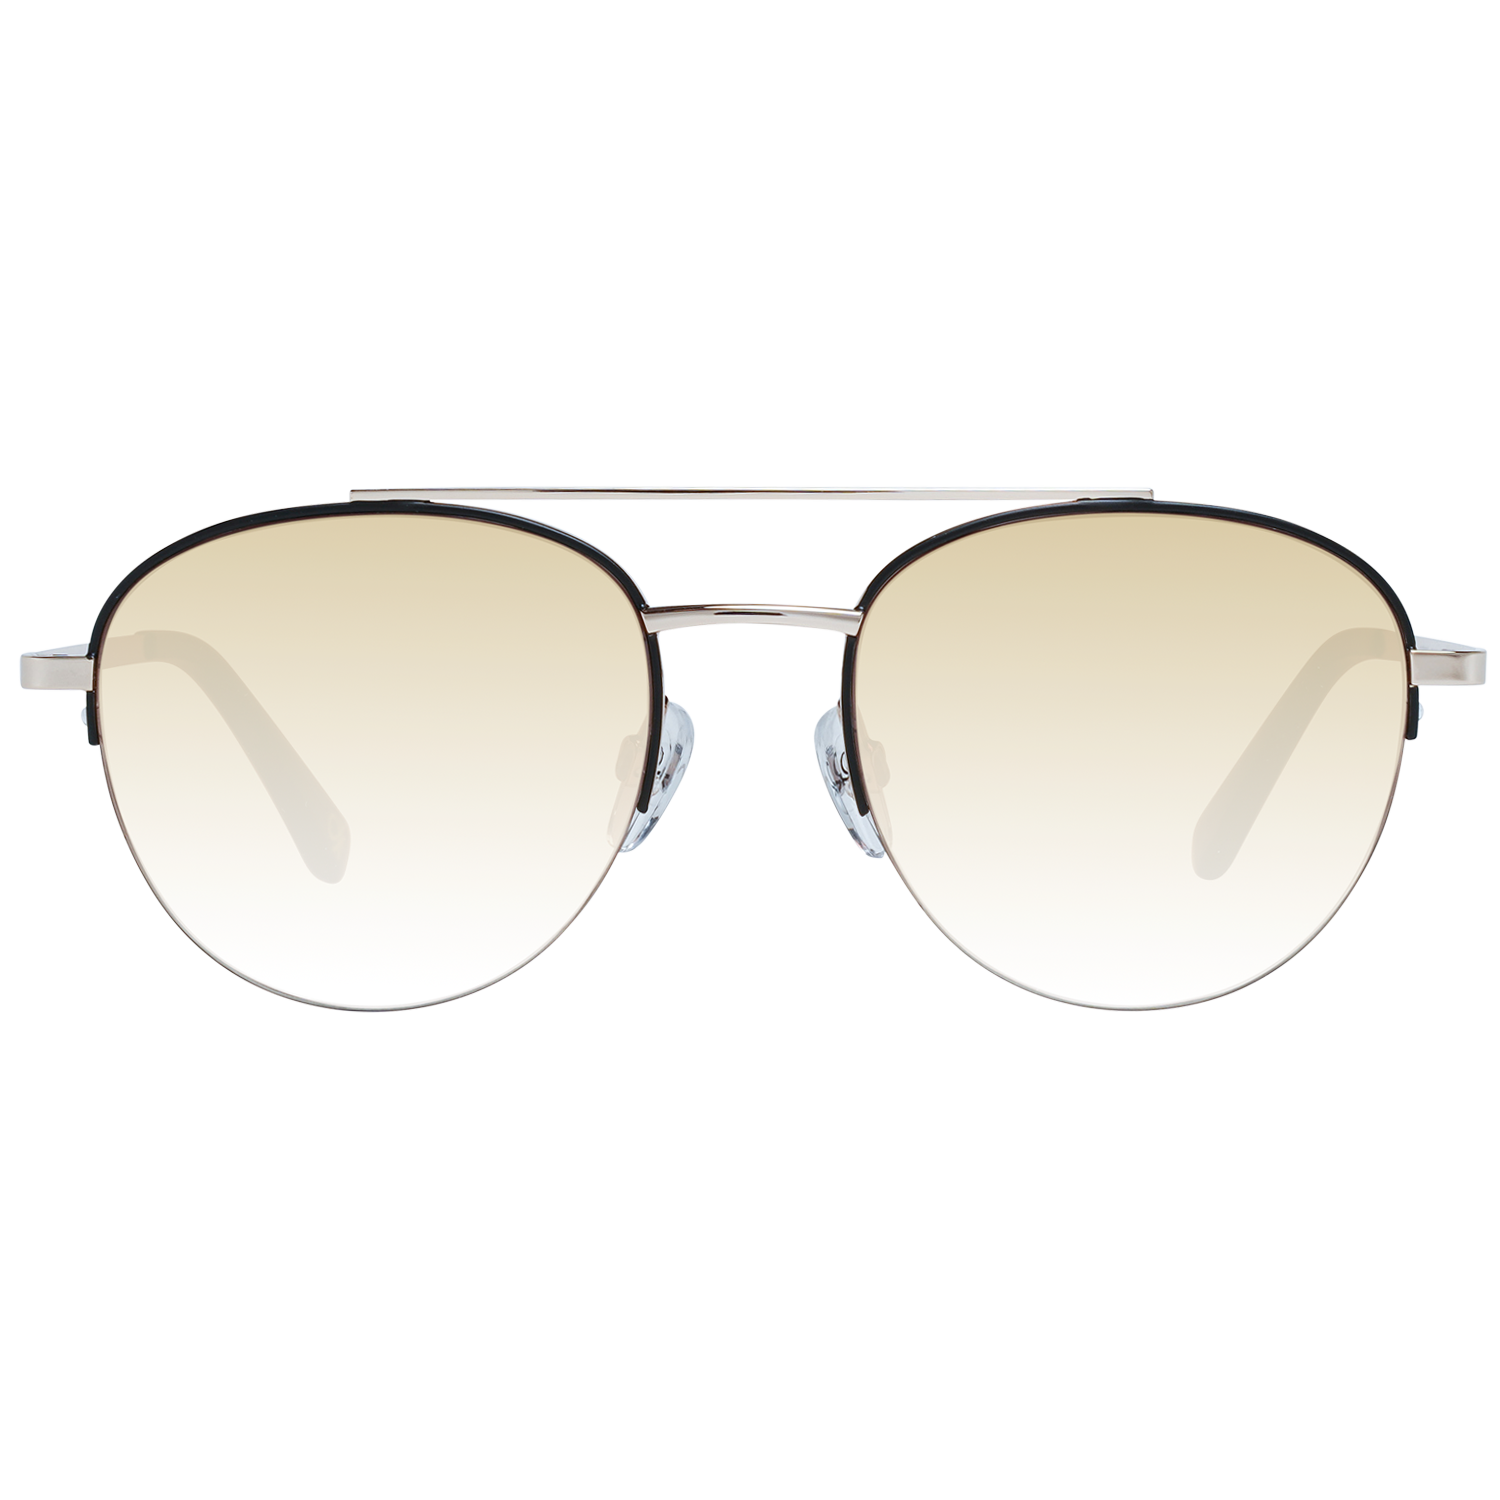 Benetton Sunglasses Benetton Sunglasses BE7028 2 50 Eyeglasses Eyewear UK USA Australia 